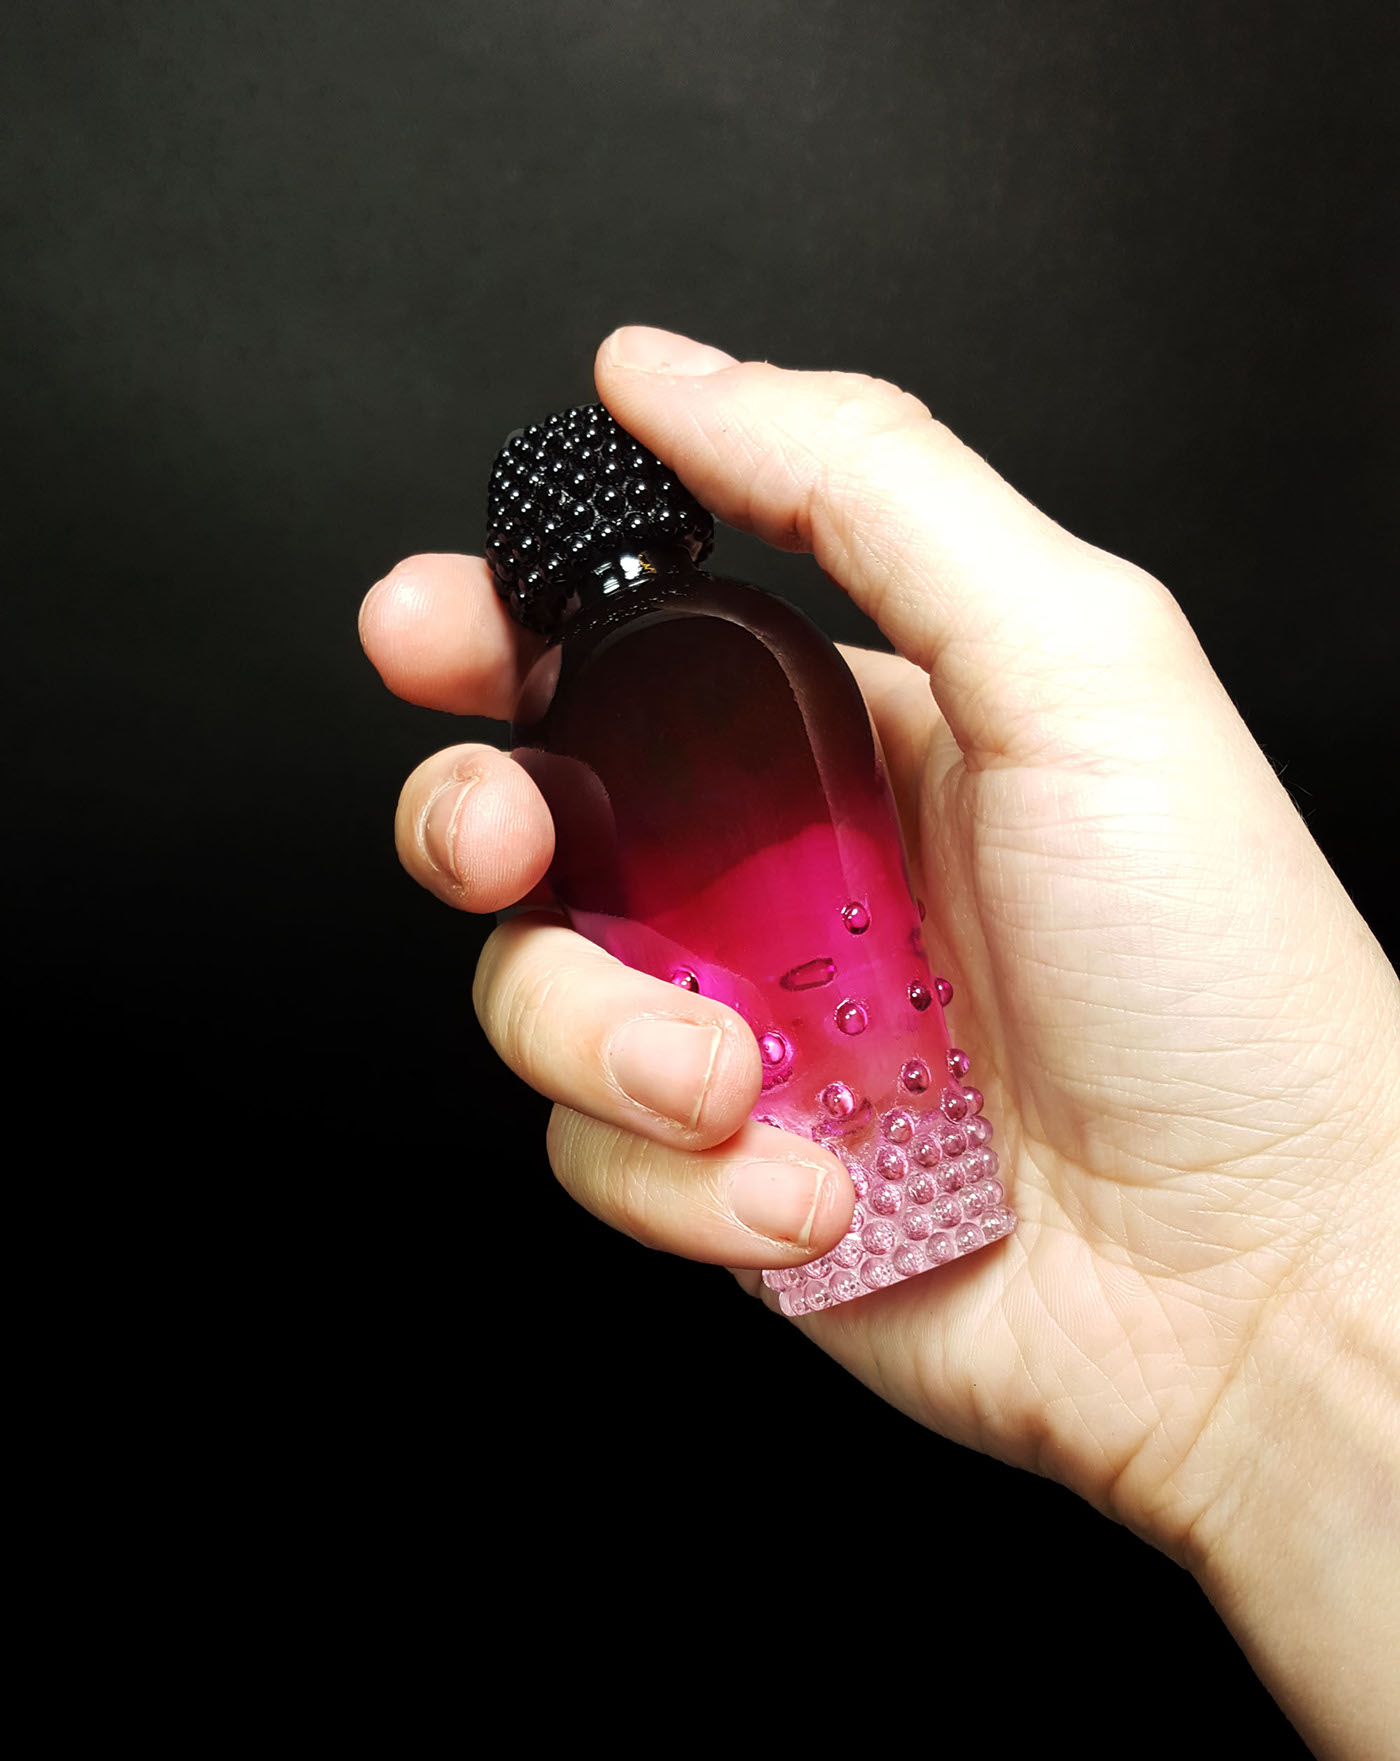 perfume Fragrance bottle glass blackberry sweet Fruit Moody shadow demure